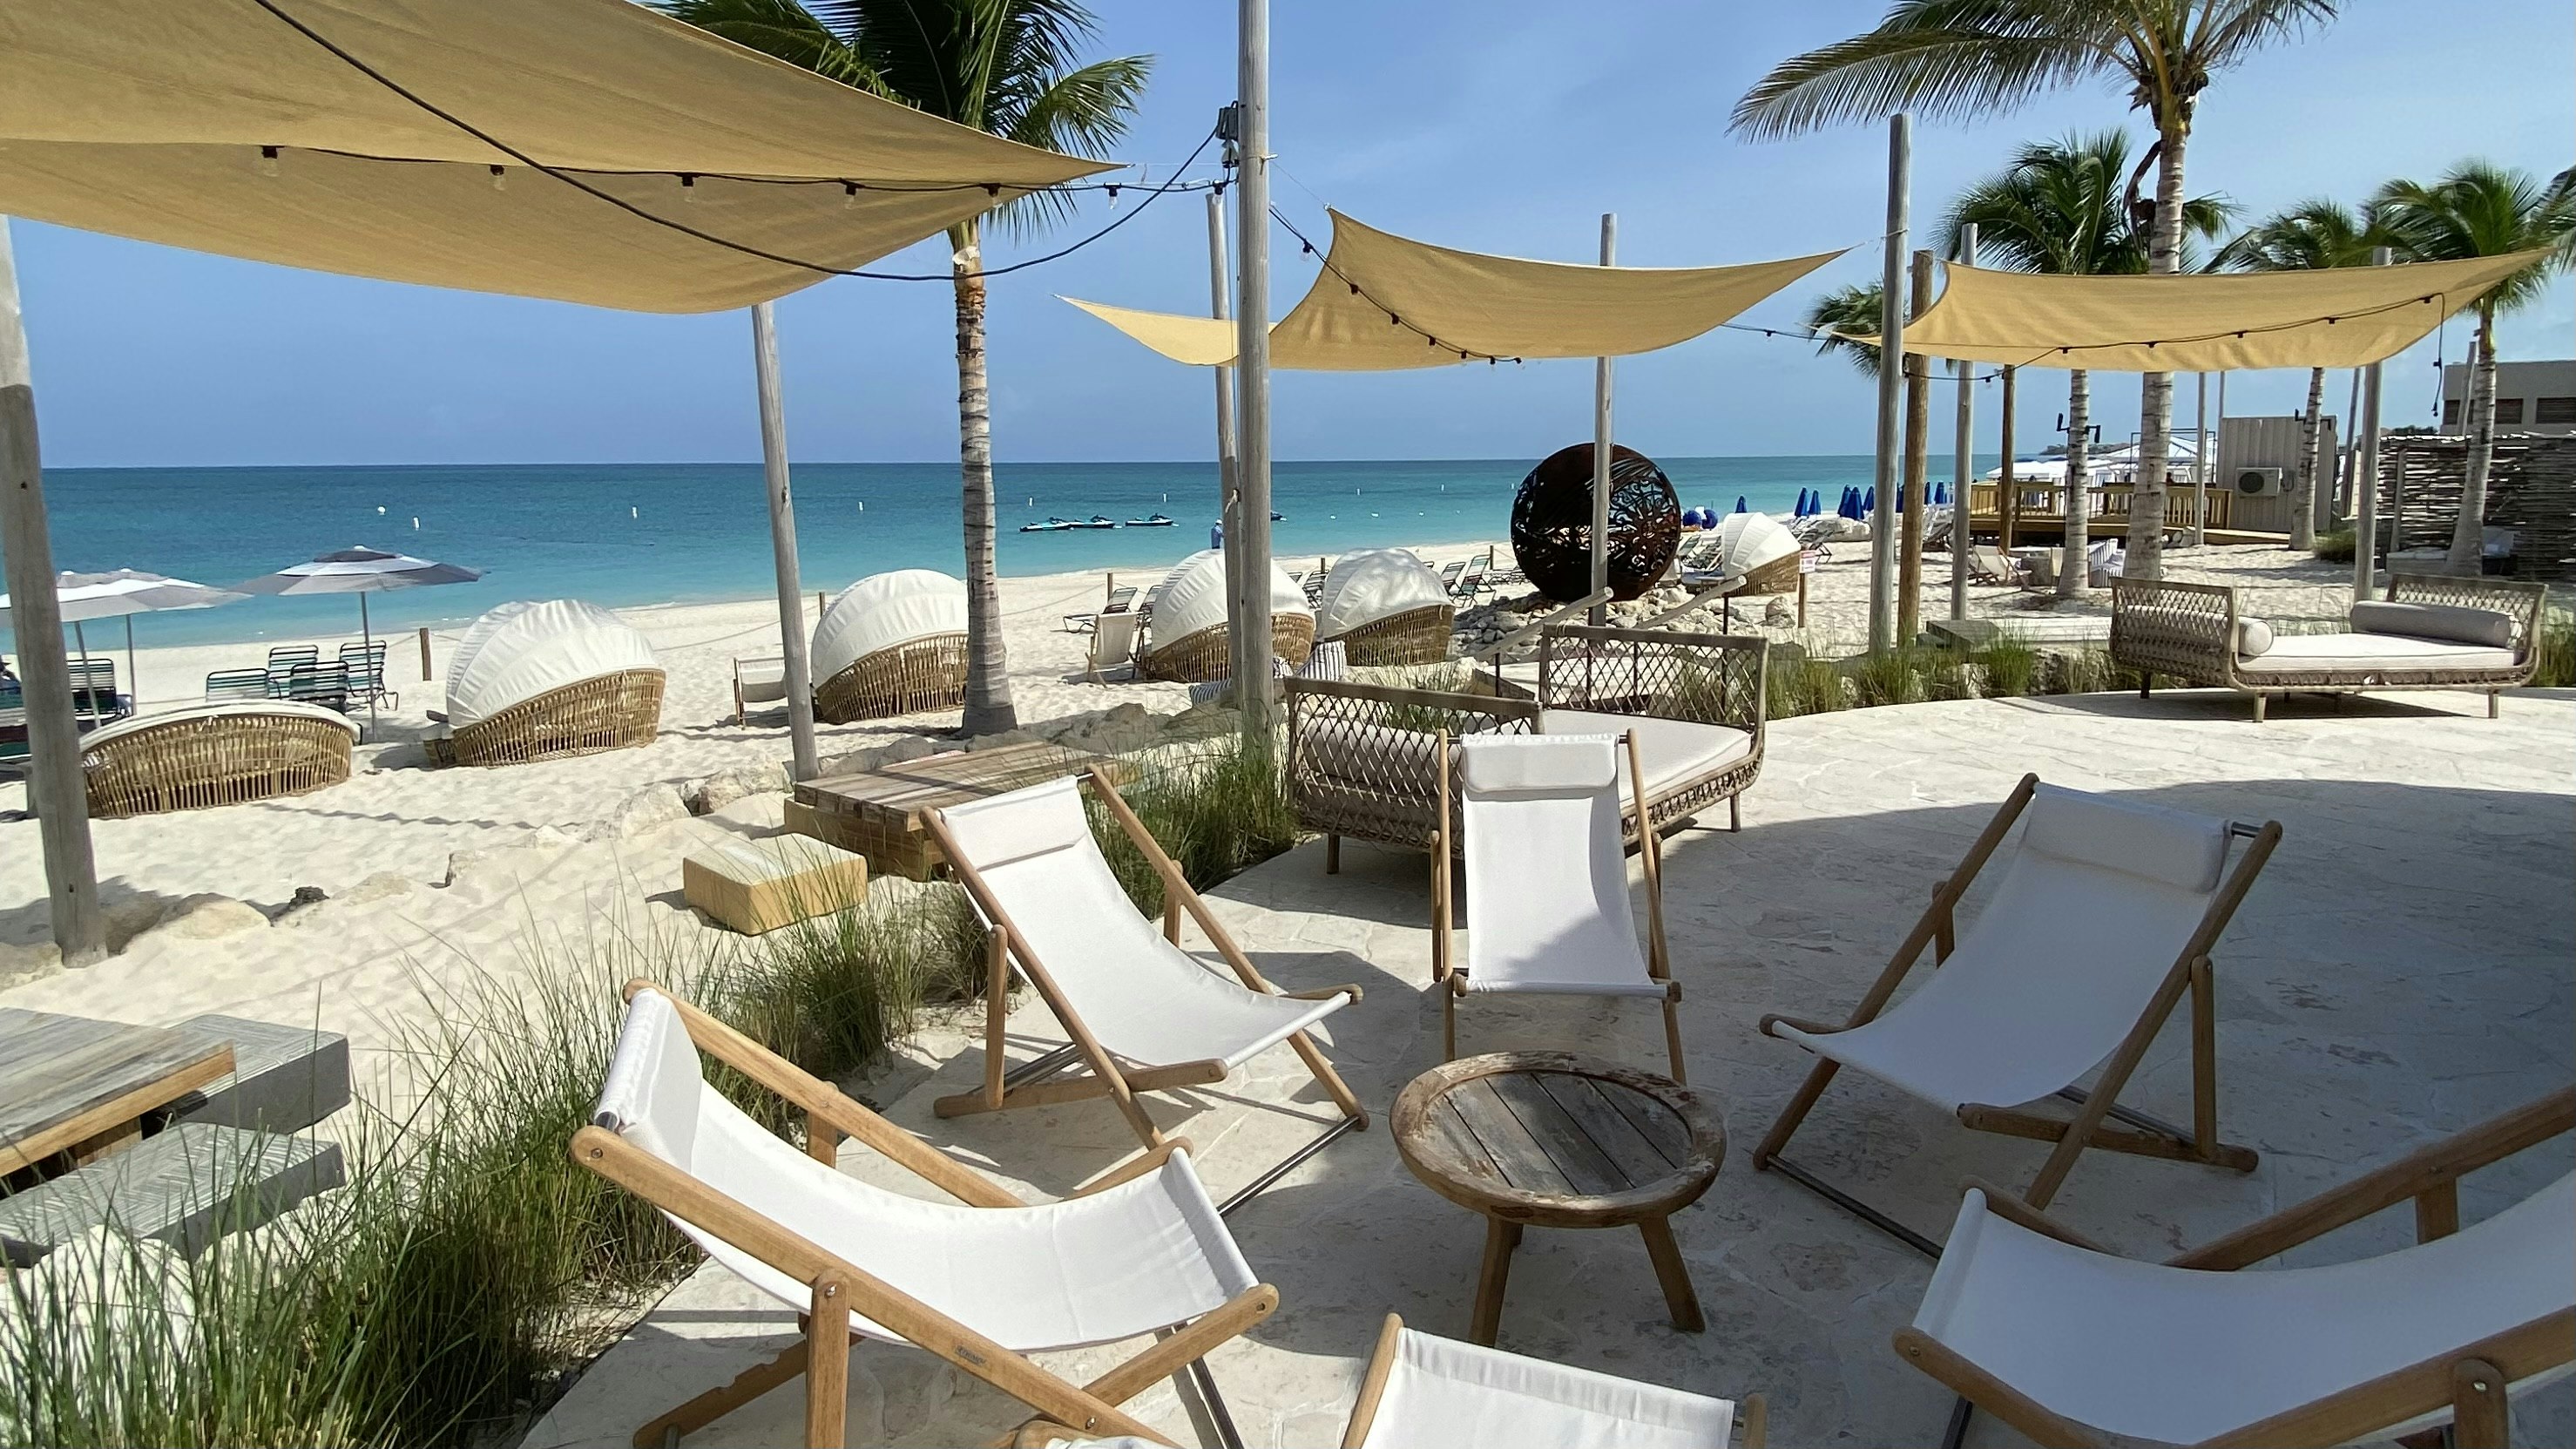 View from Virgin Voyages’ private beach club at Bimini, Bahamas.jpg